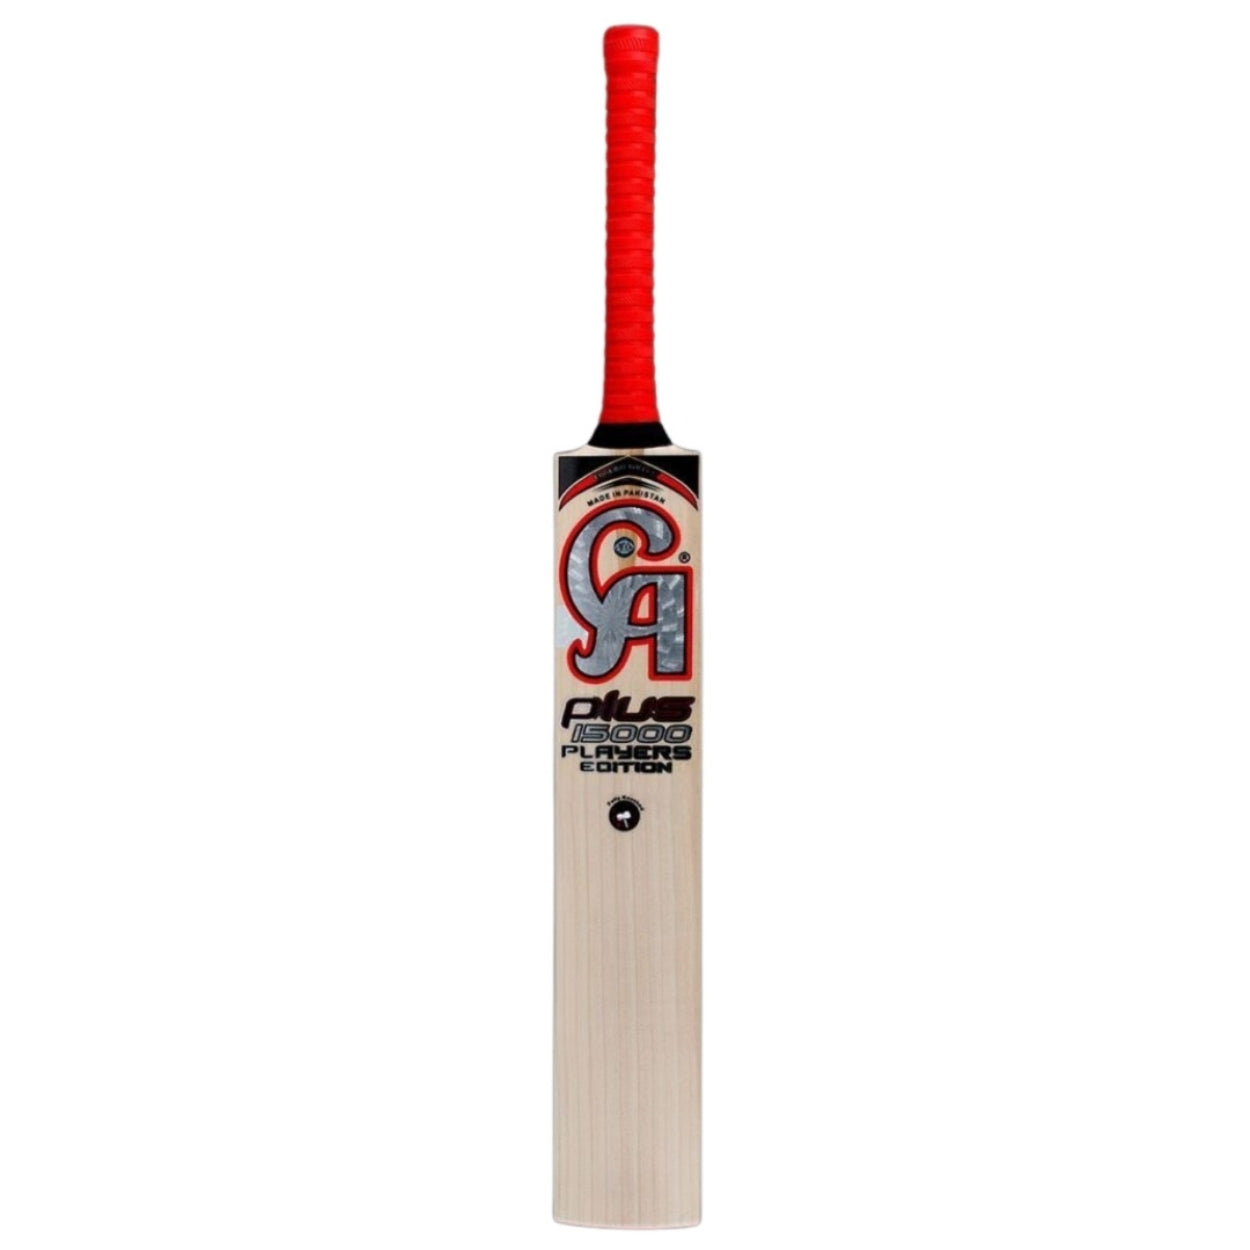 CA Plus 15000 Player’s Edition Cricket Bat